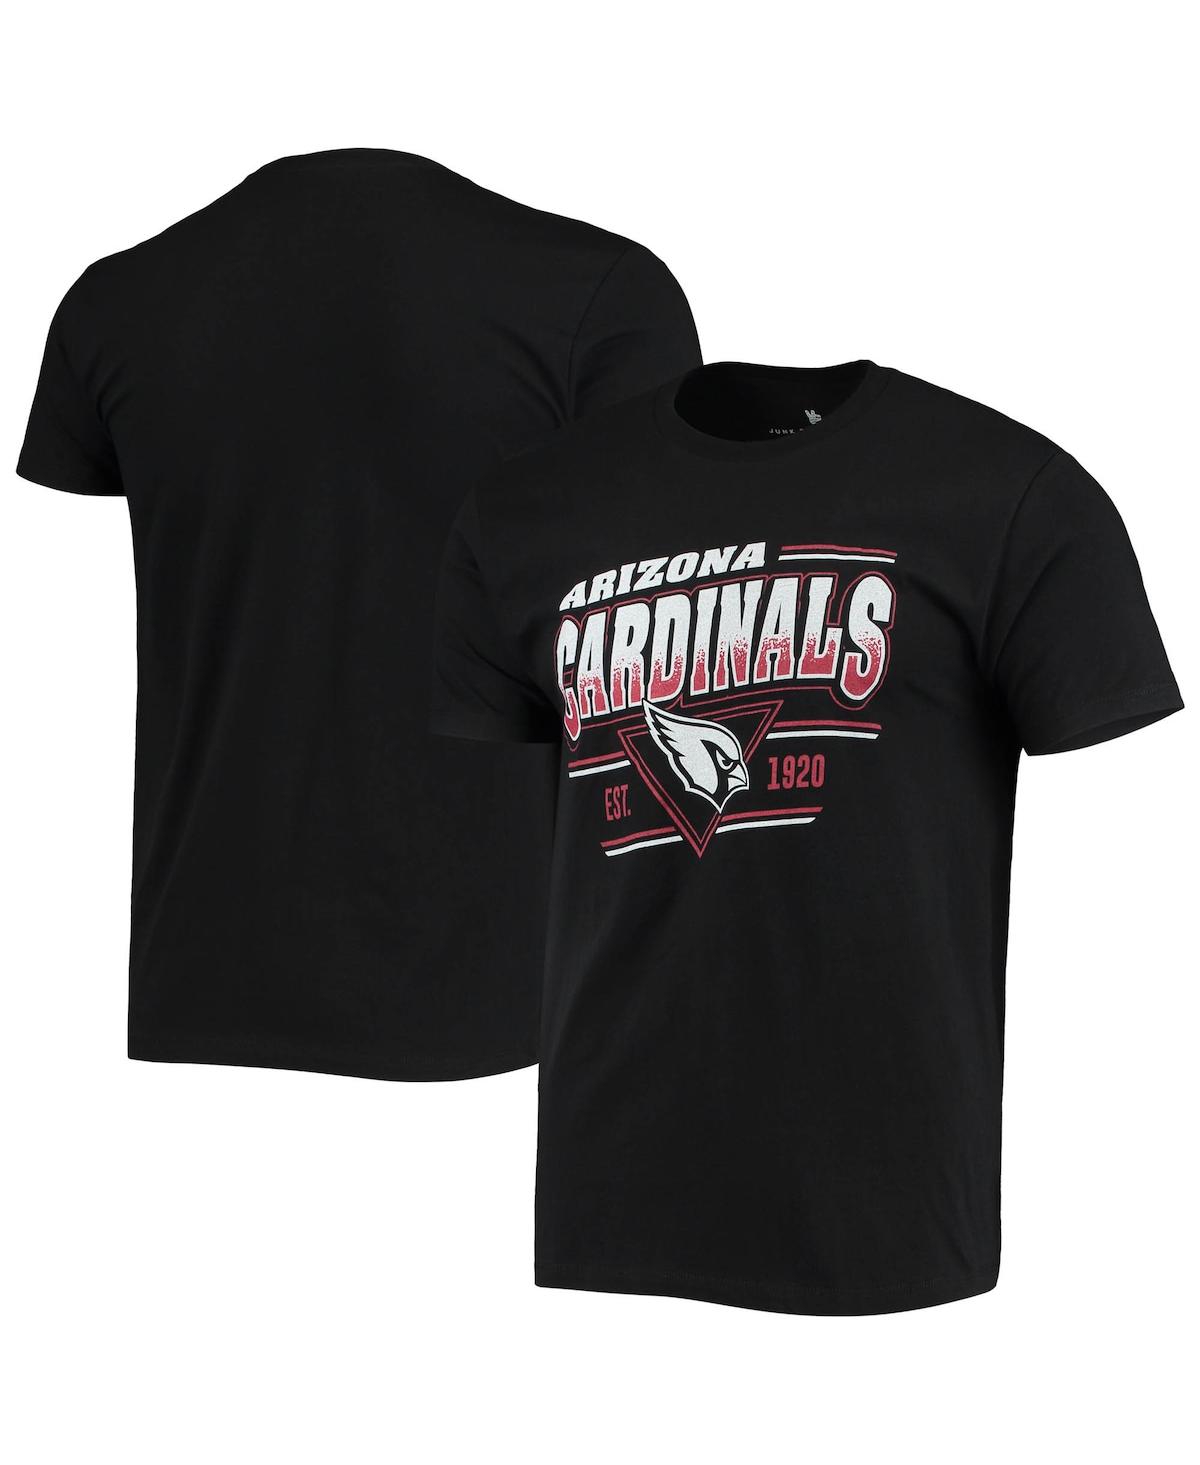 Men's Black Arizona Cardinals Throwback T-shirt - Black